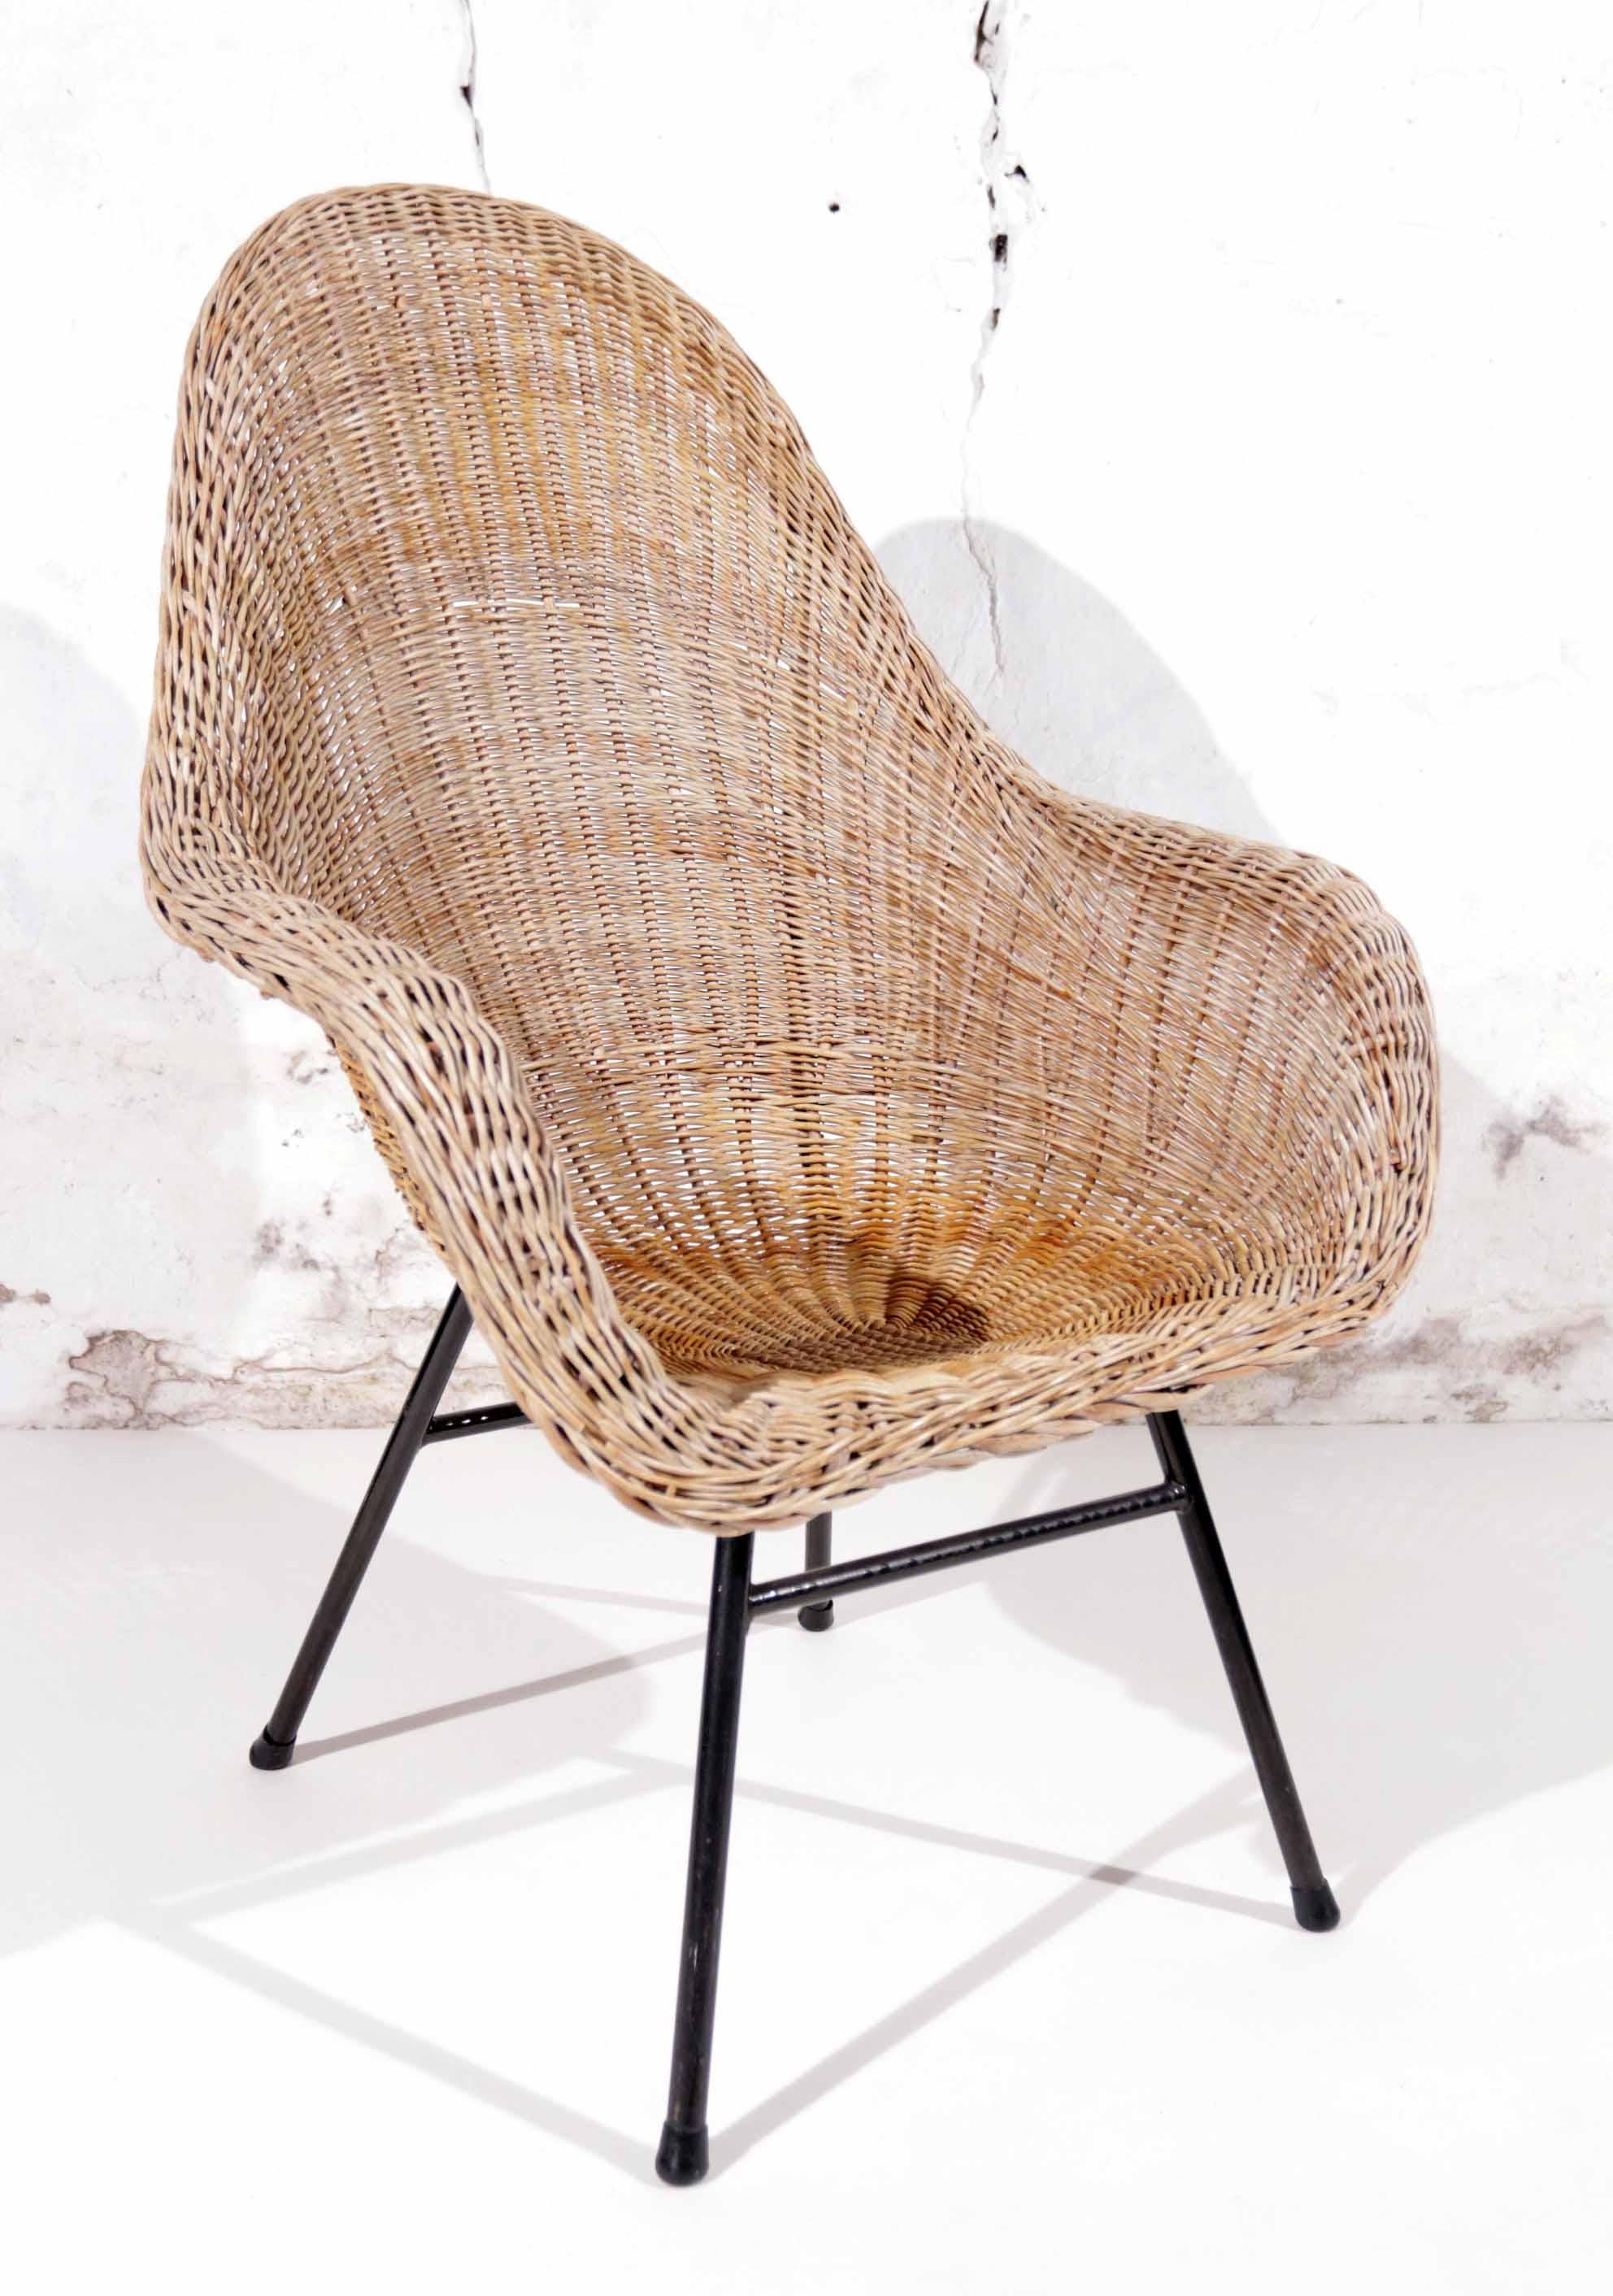 rattan chair with sheepskin